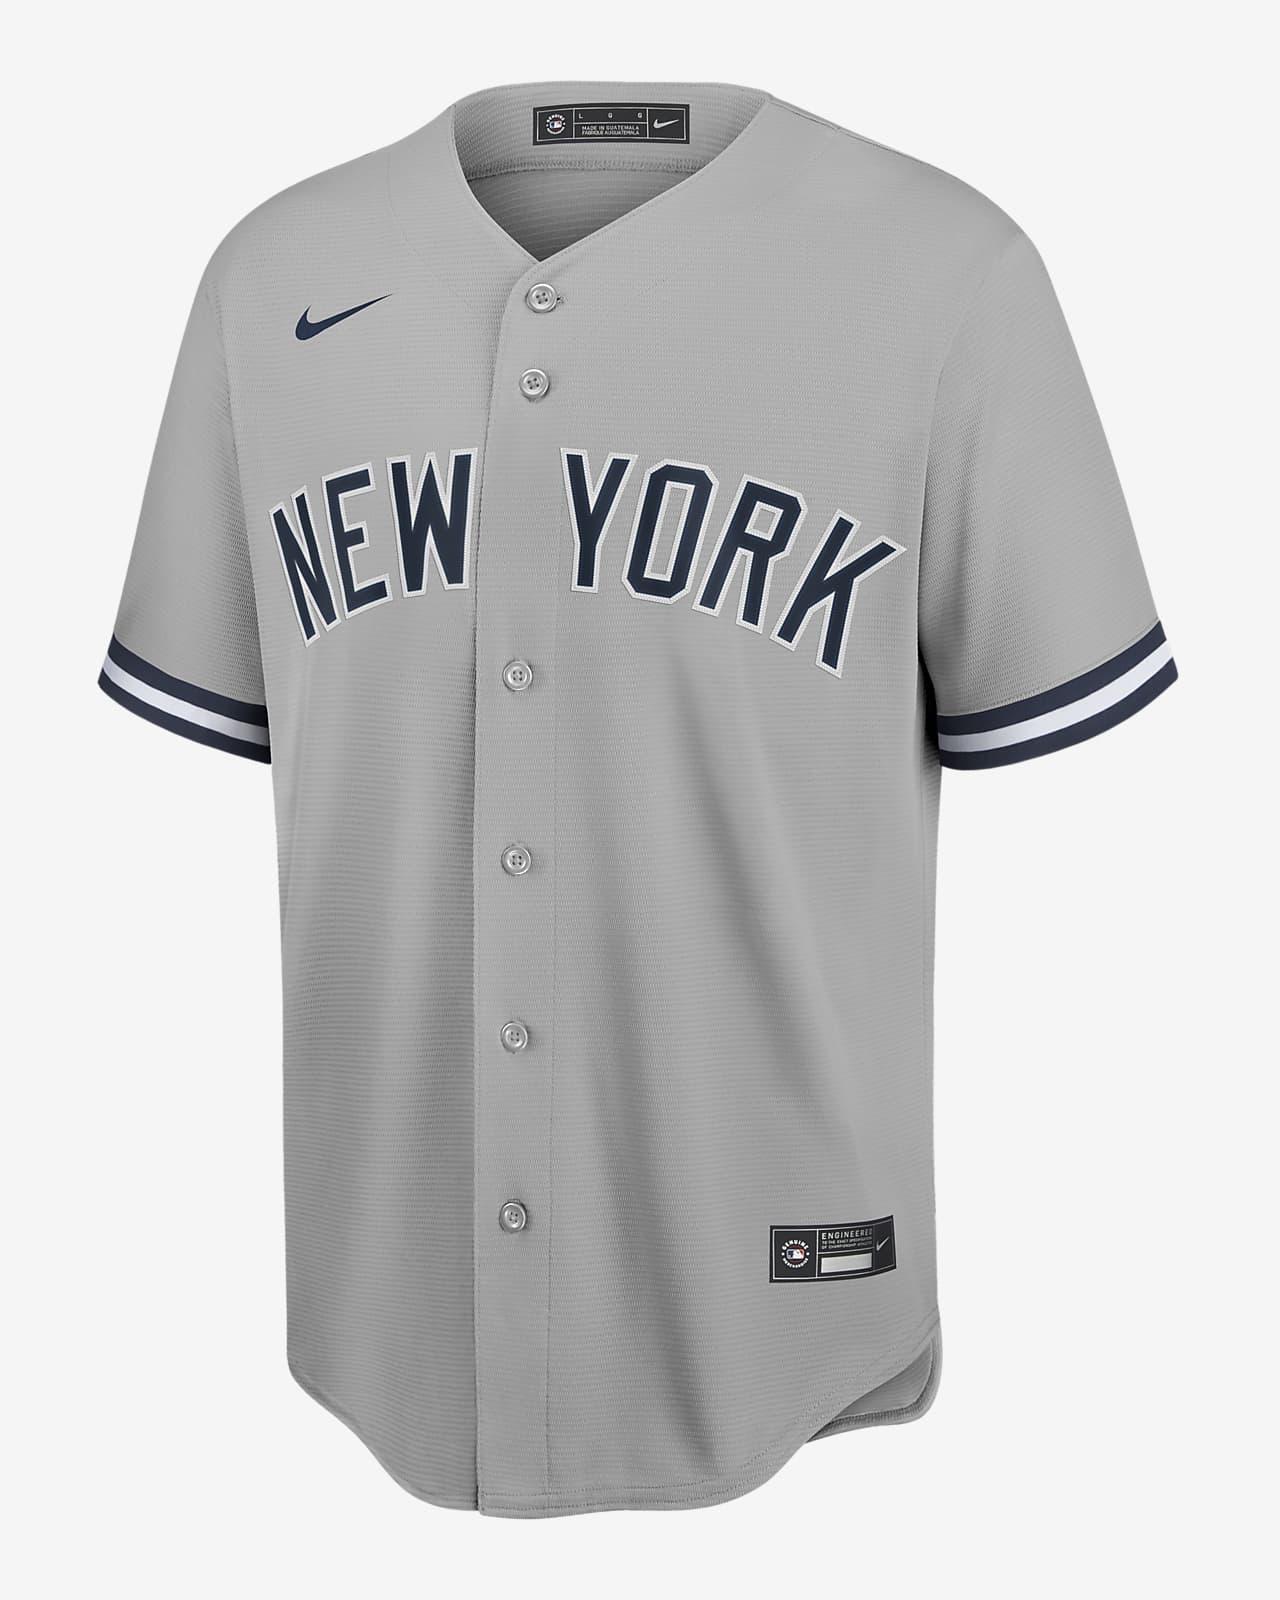 grey mlb baseball jersey